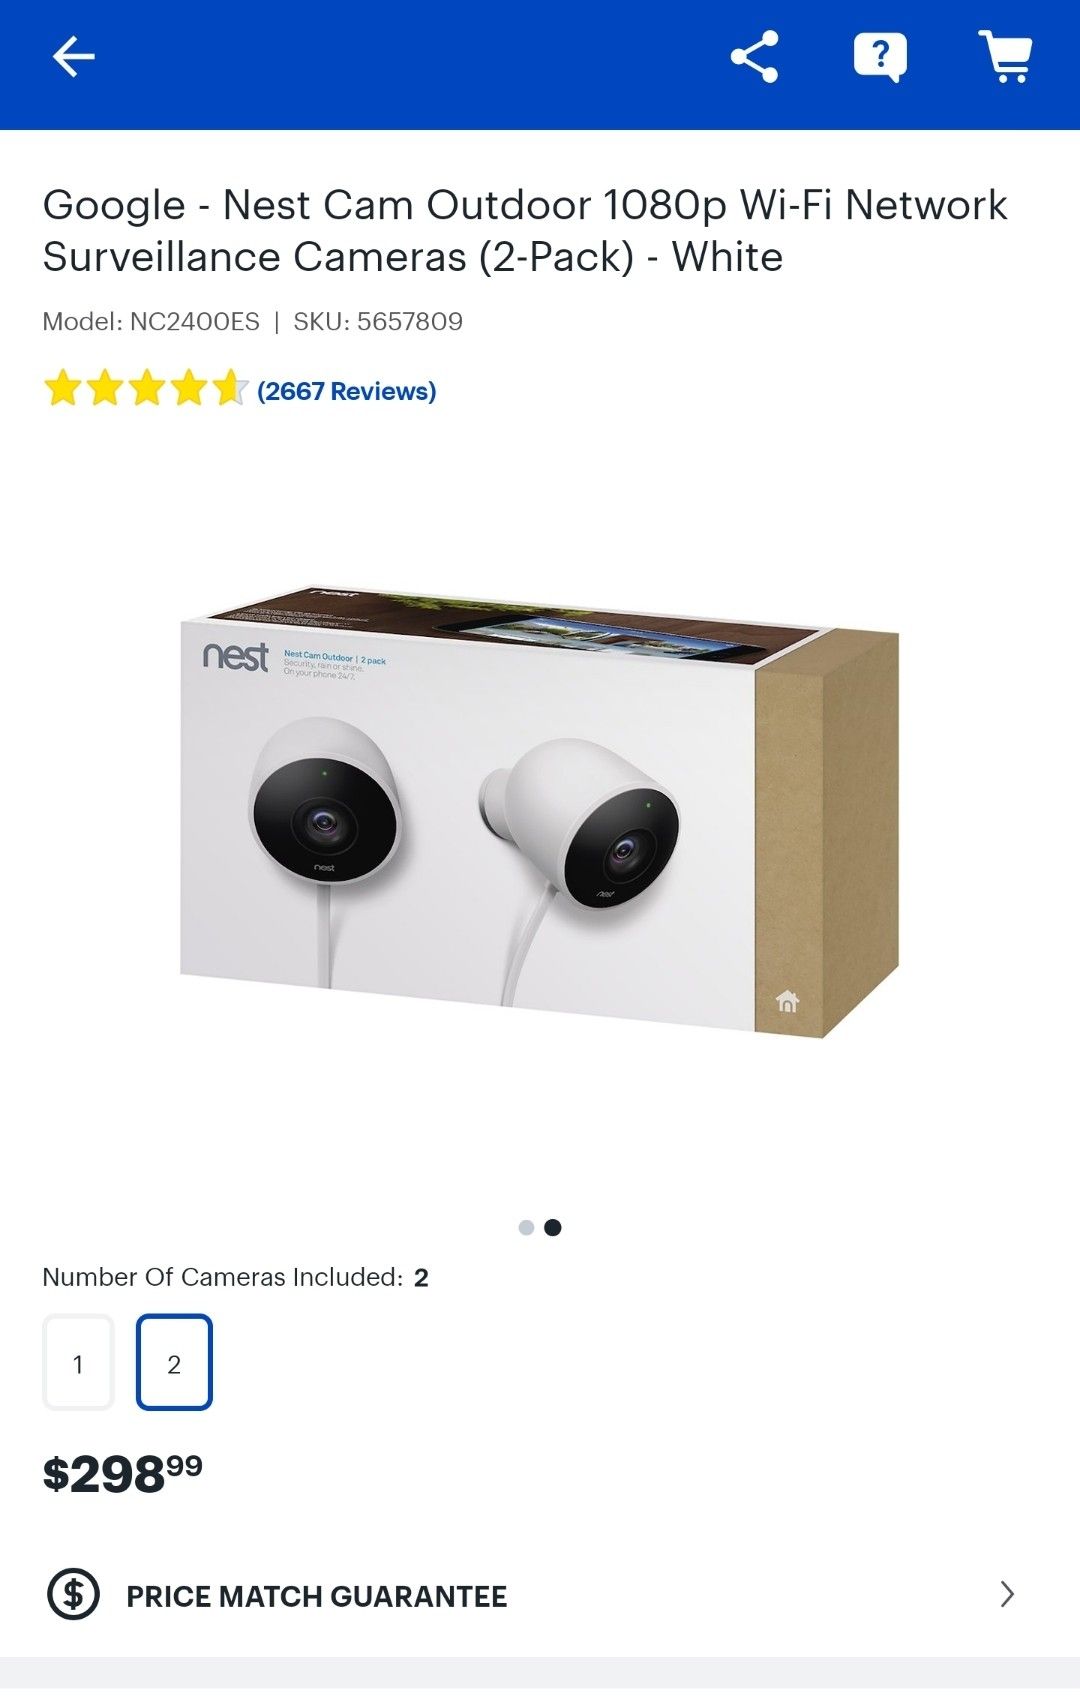 Google - Nest Cam Outdoor 1080p Wi-Fi Network Surveillance Cameras (2-Pack) - White